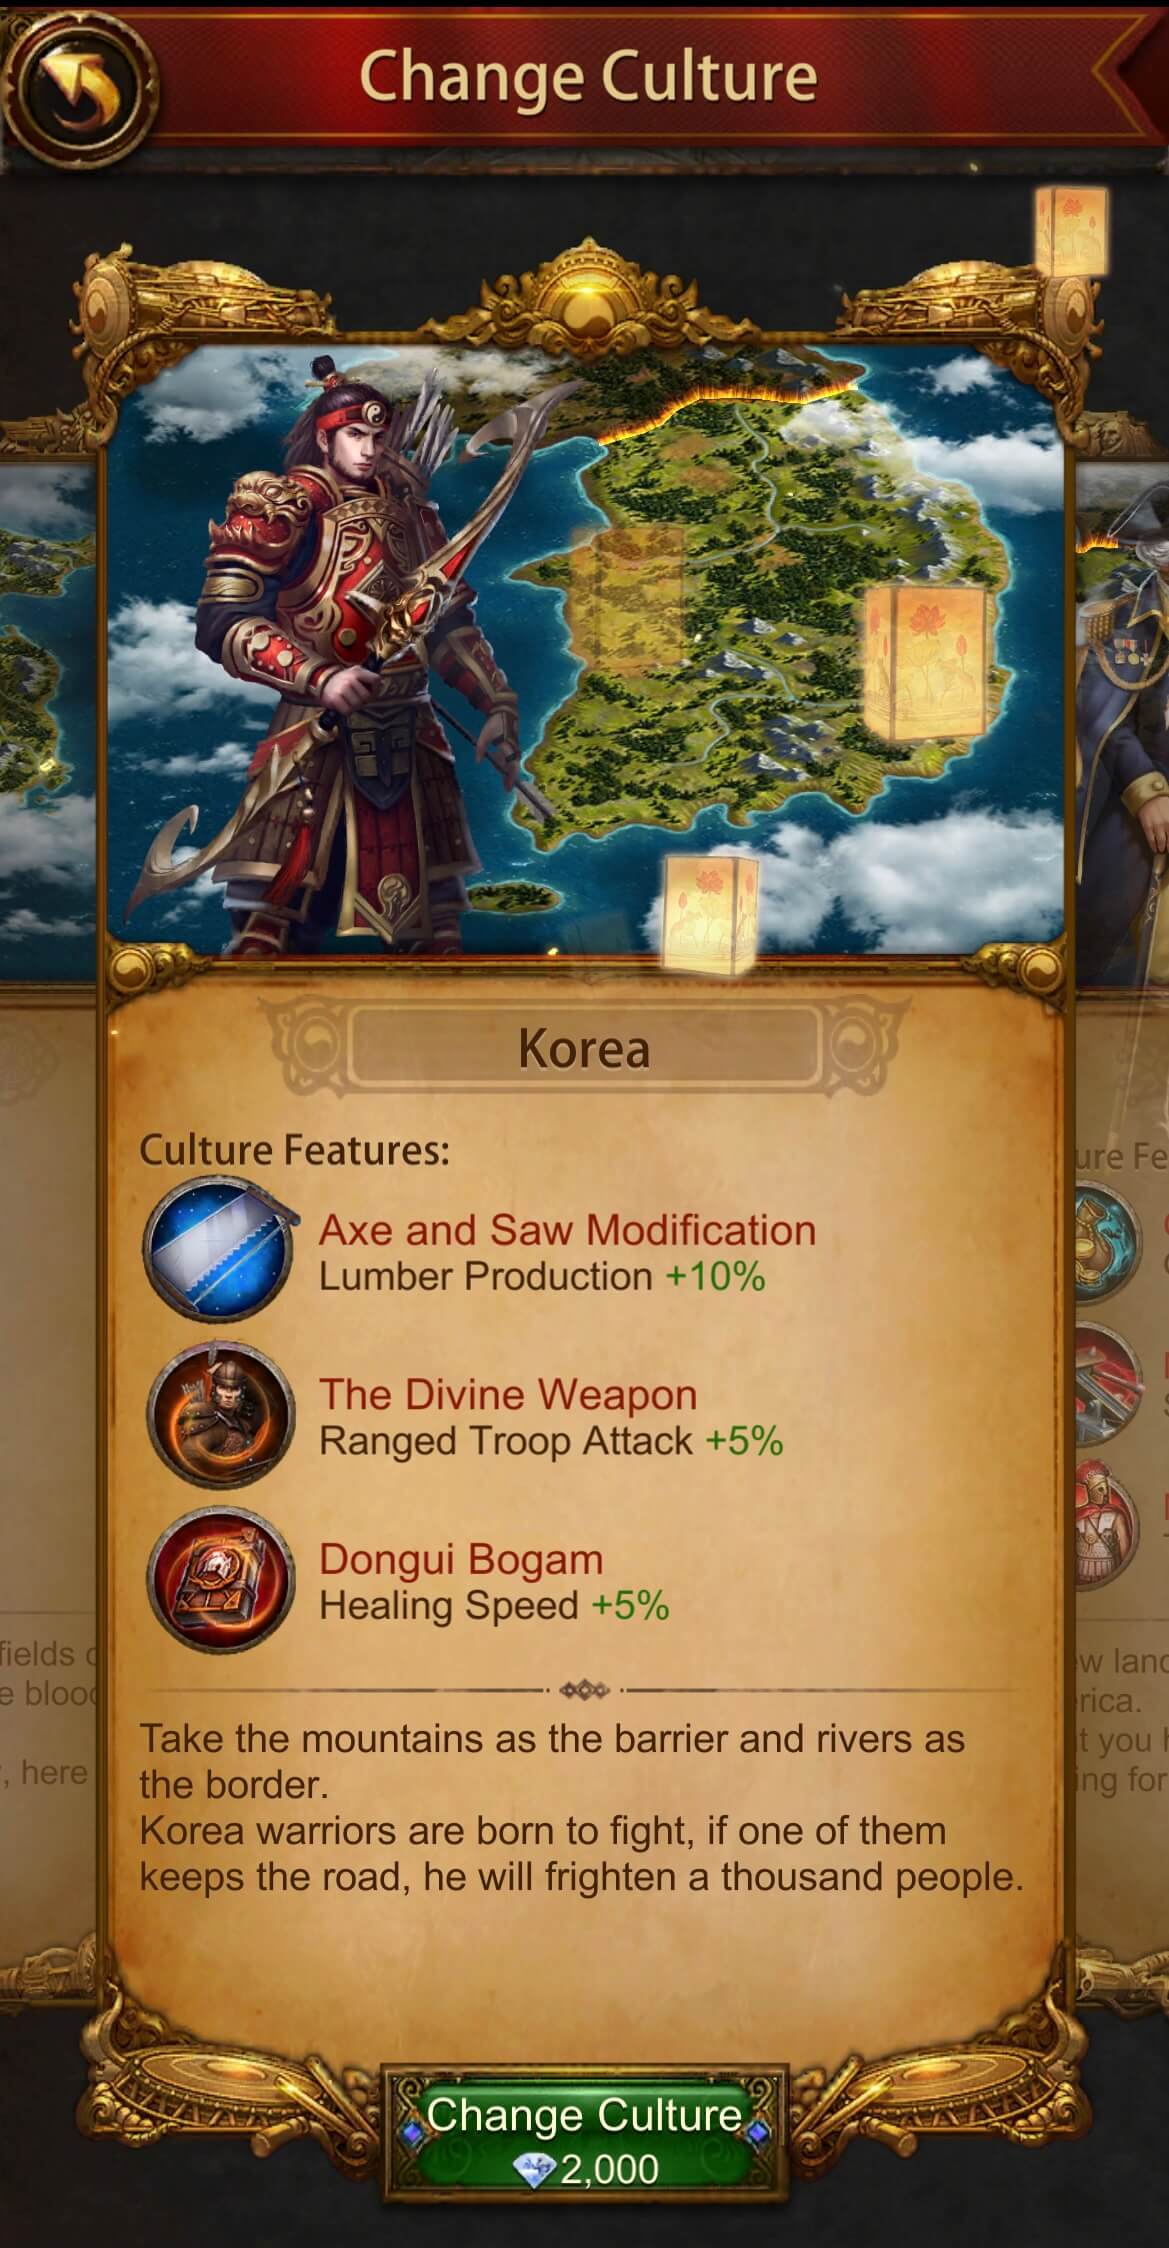 Korea Culture